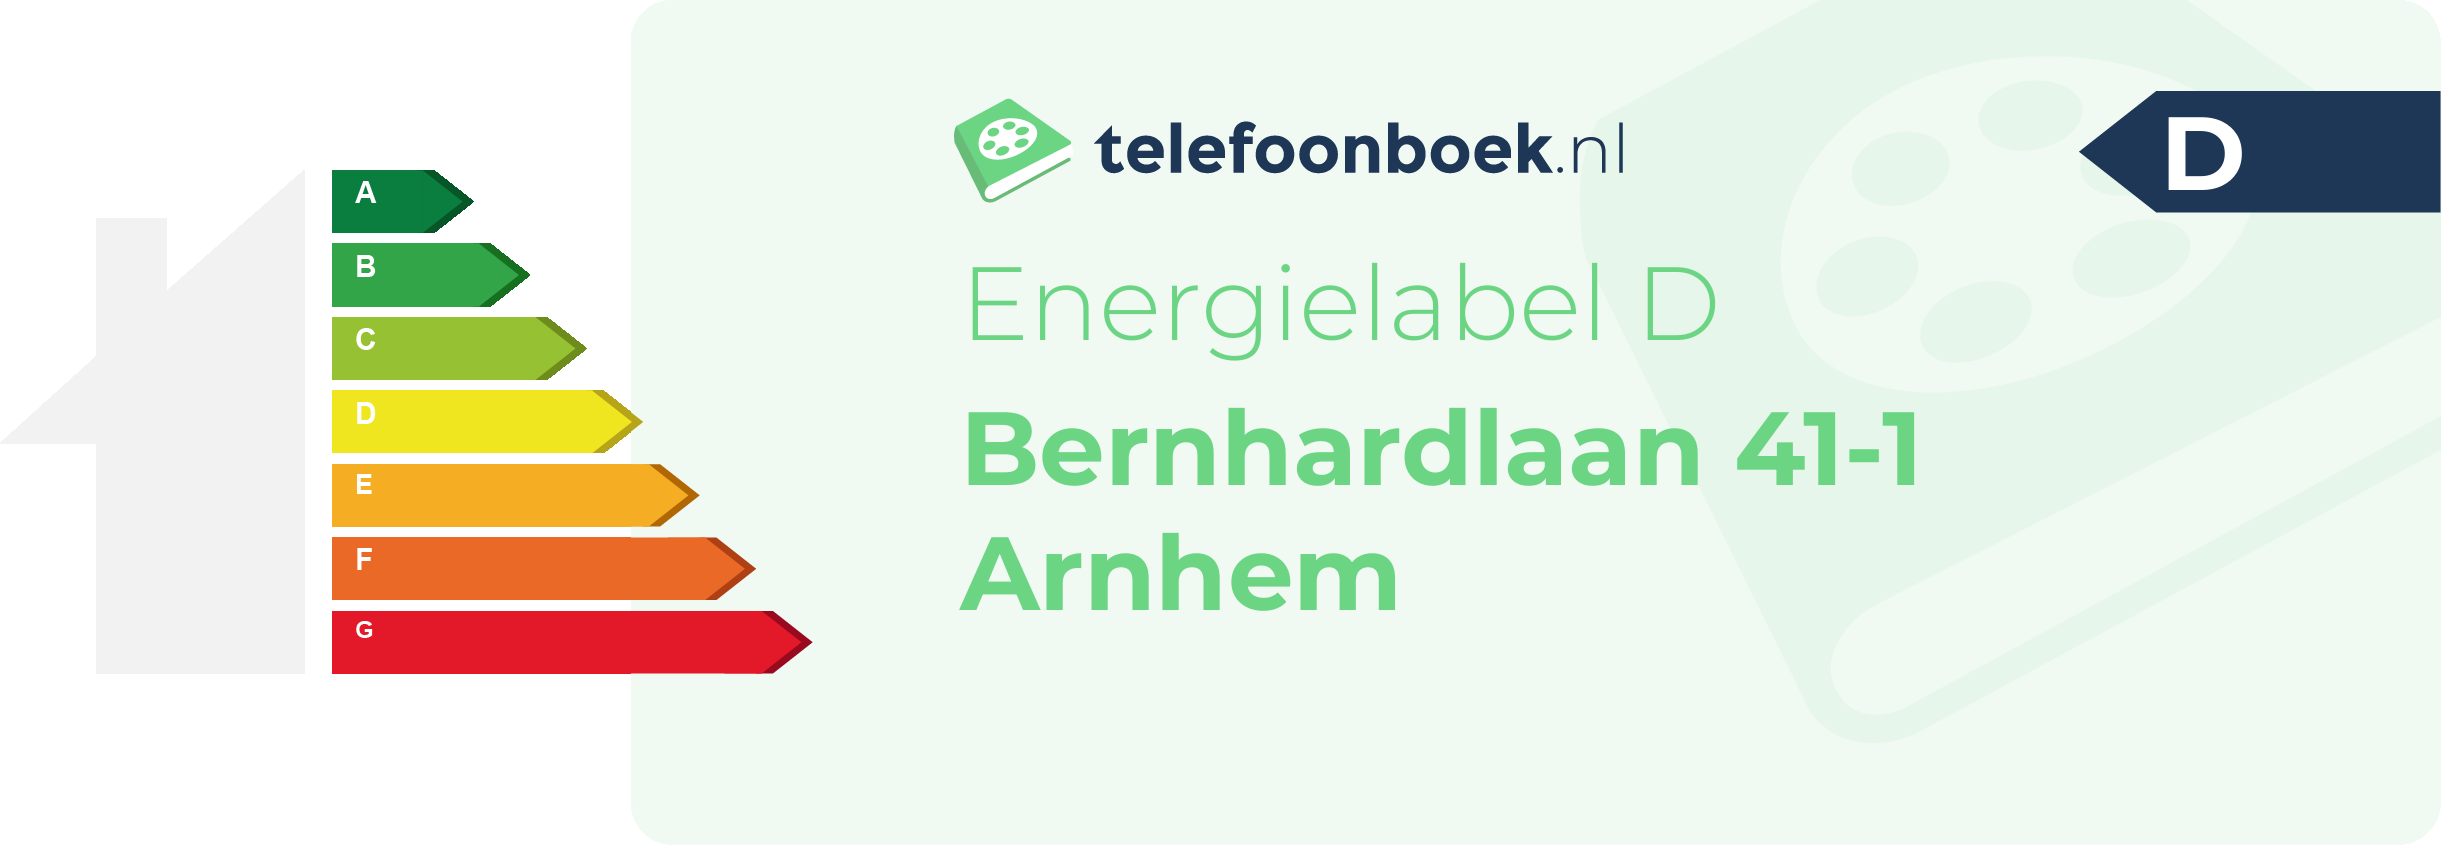 Energielabel Bernhardlaan 41-1 Arnhem